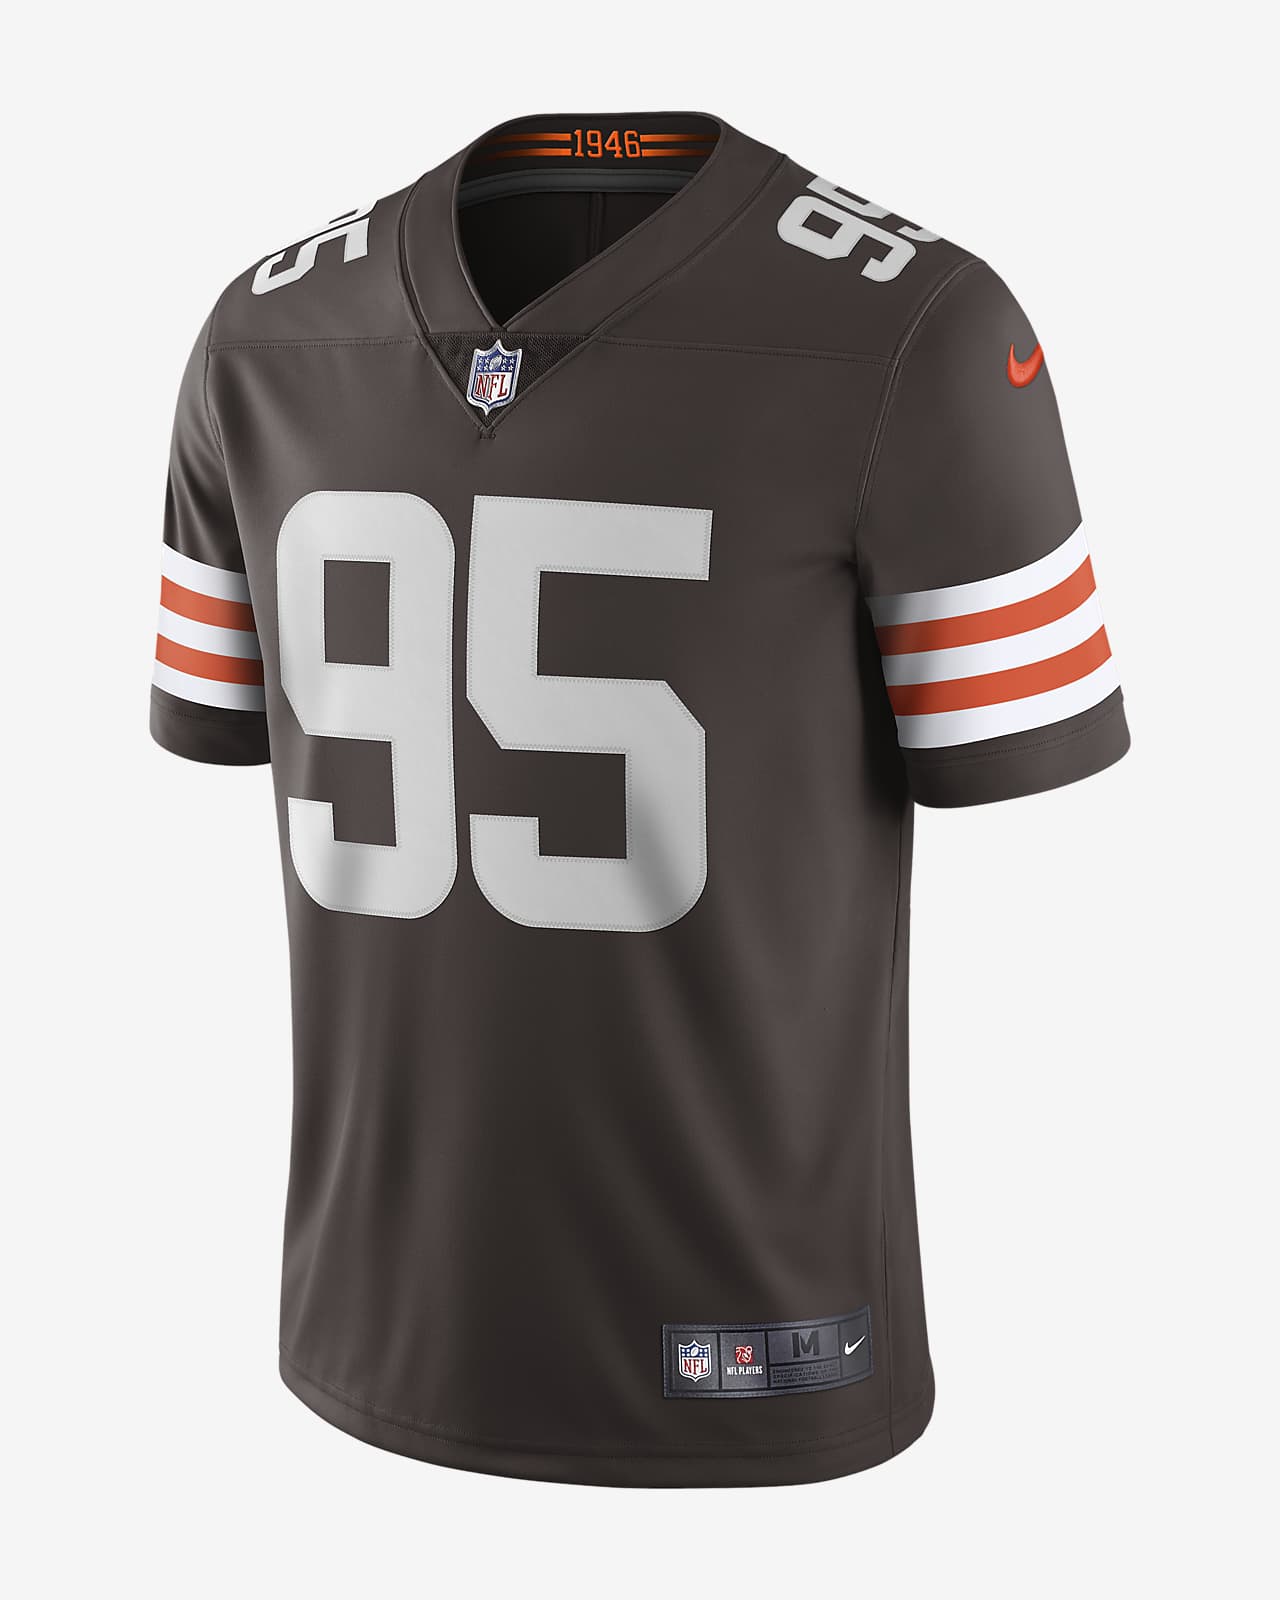 NFL Cleveland Browns Vapor Untouchable (Myles Garrett) Men's Limited Football Jersey